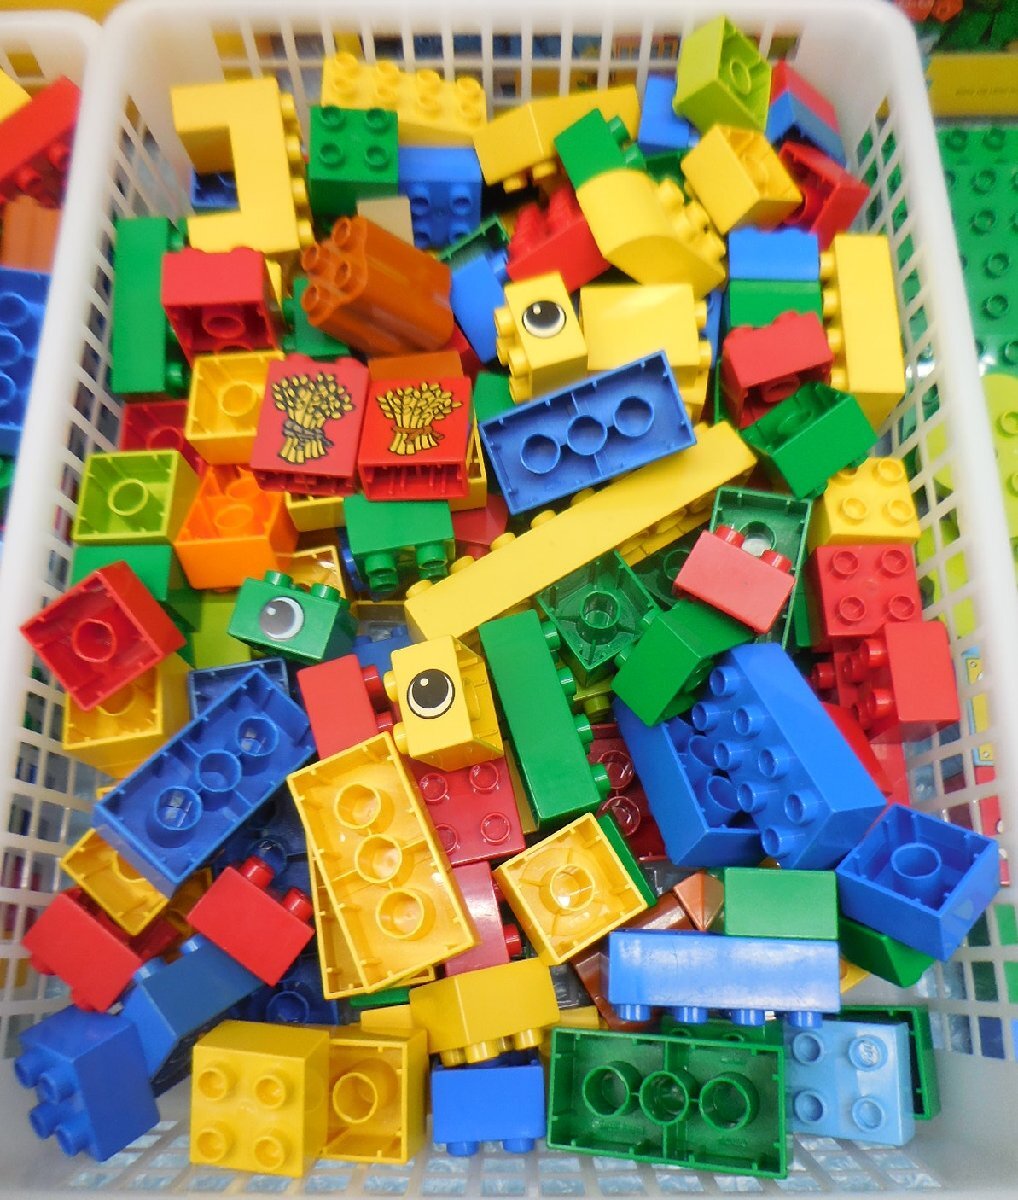  хобби LEGO Lego Duplo Lego контейнер совместно комплект Junk * не осмотр товар fig животное Lego Classic 